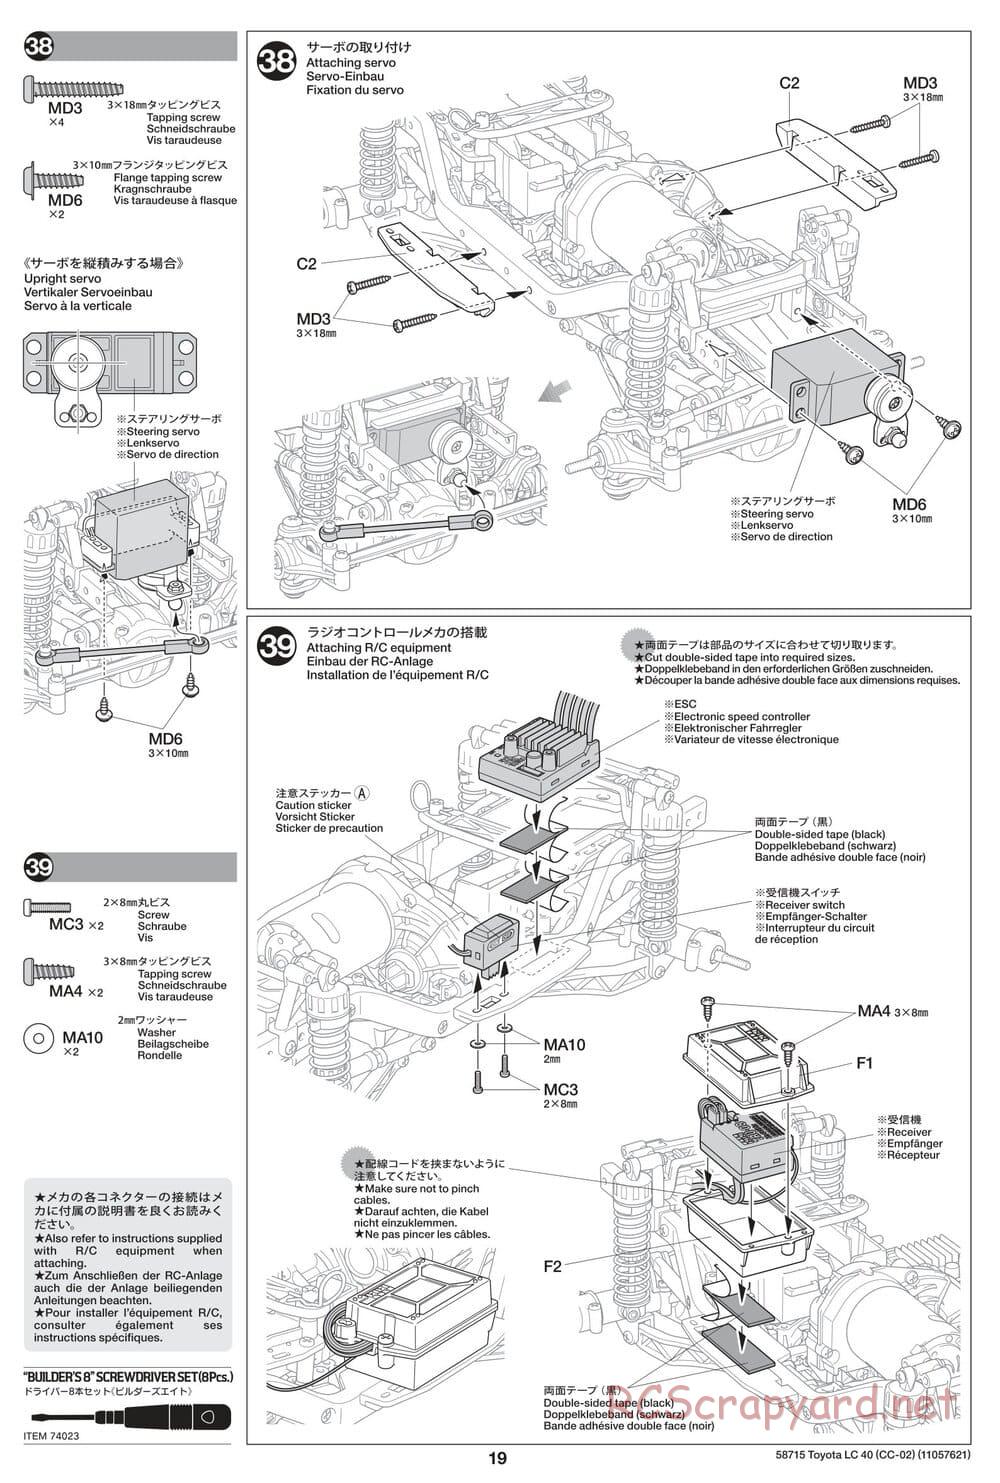 Tamiya - Toyota Land Cruiser 40 - CC-02 Chassis - Manual - Page 19